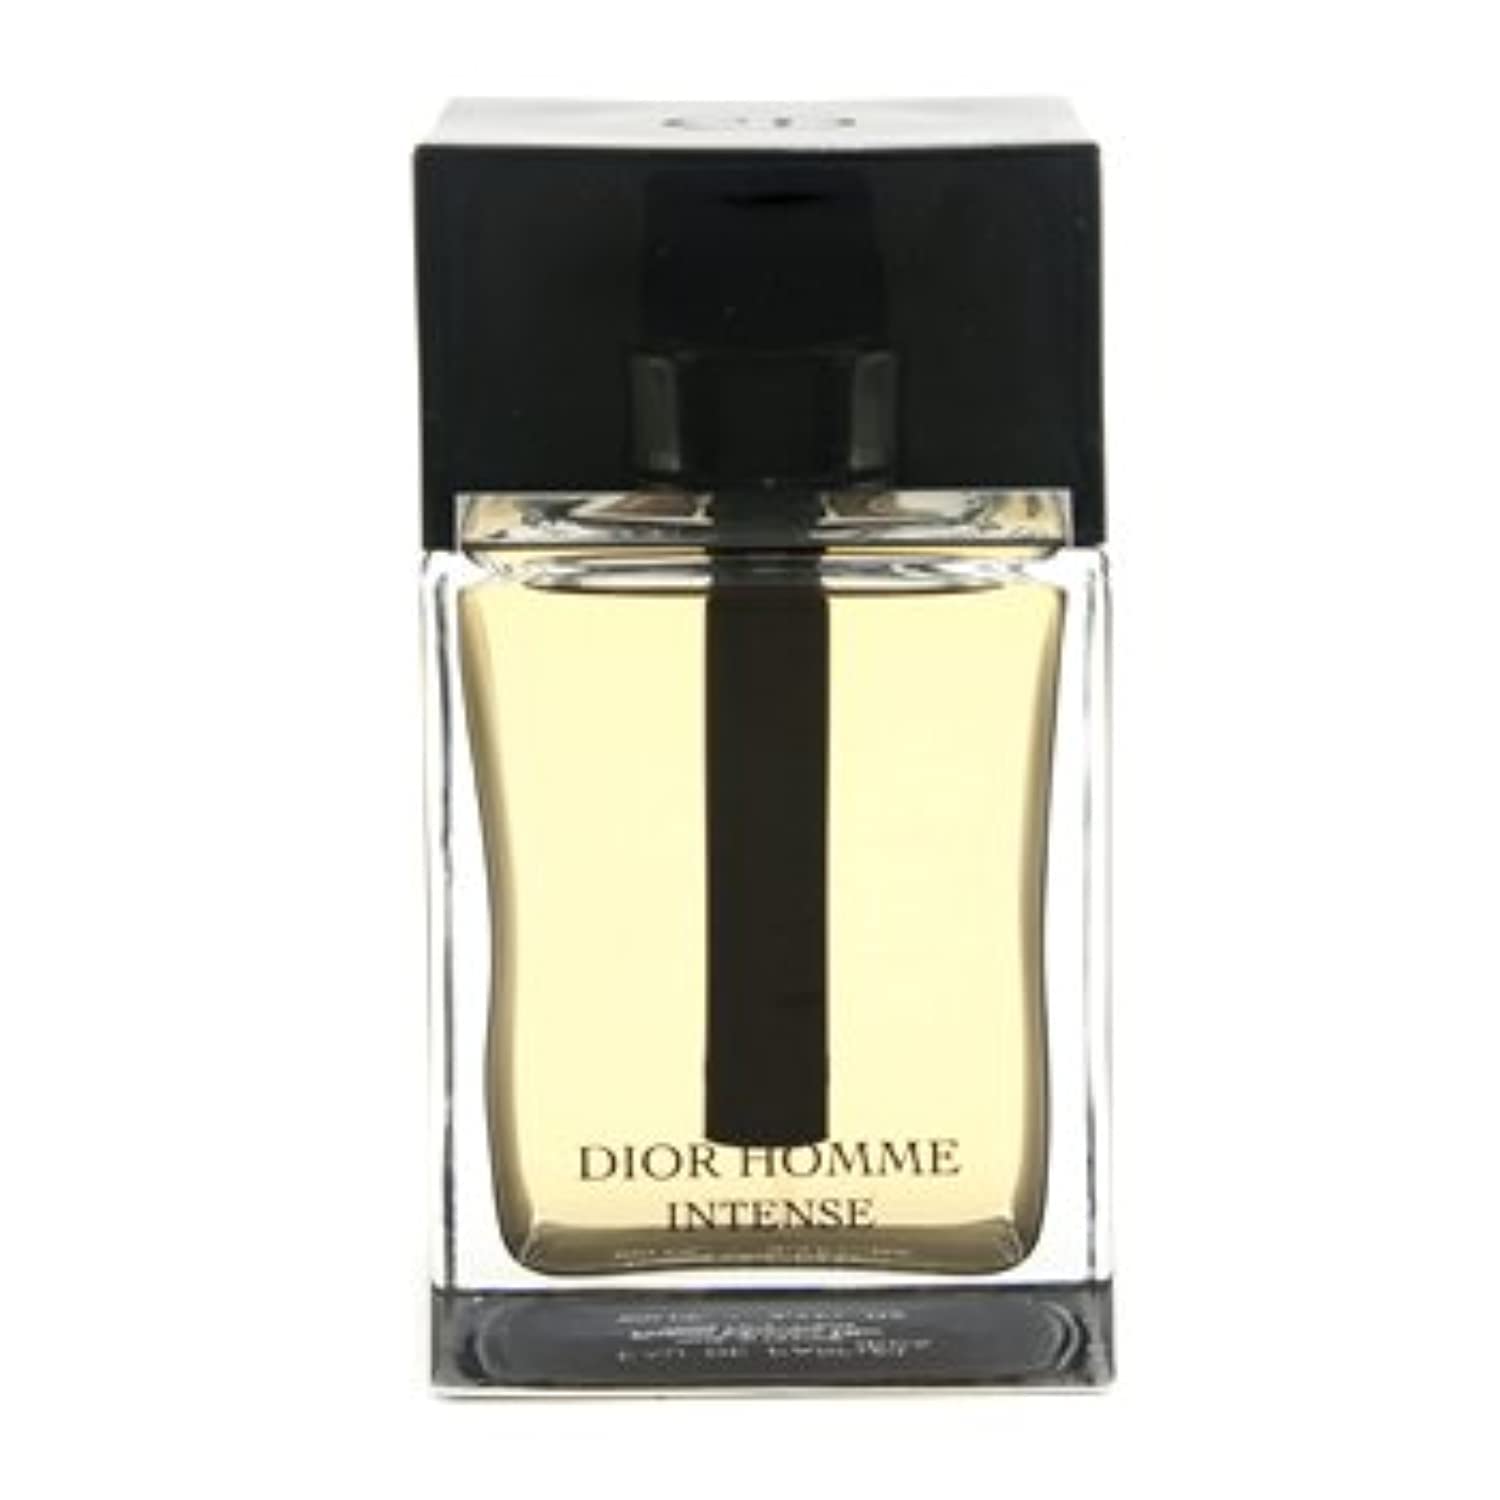 Dior Homme Intense Eau de parfum intense  DIOR  Smith  Caugheys